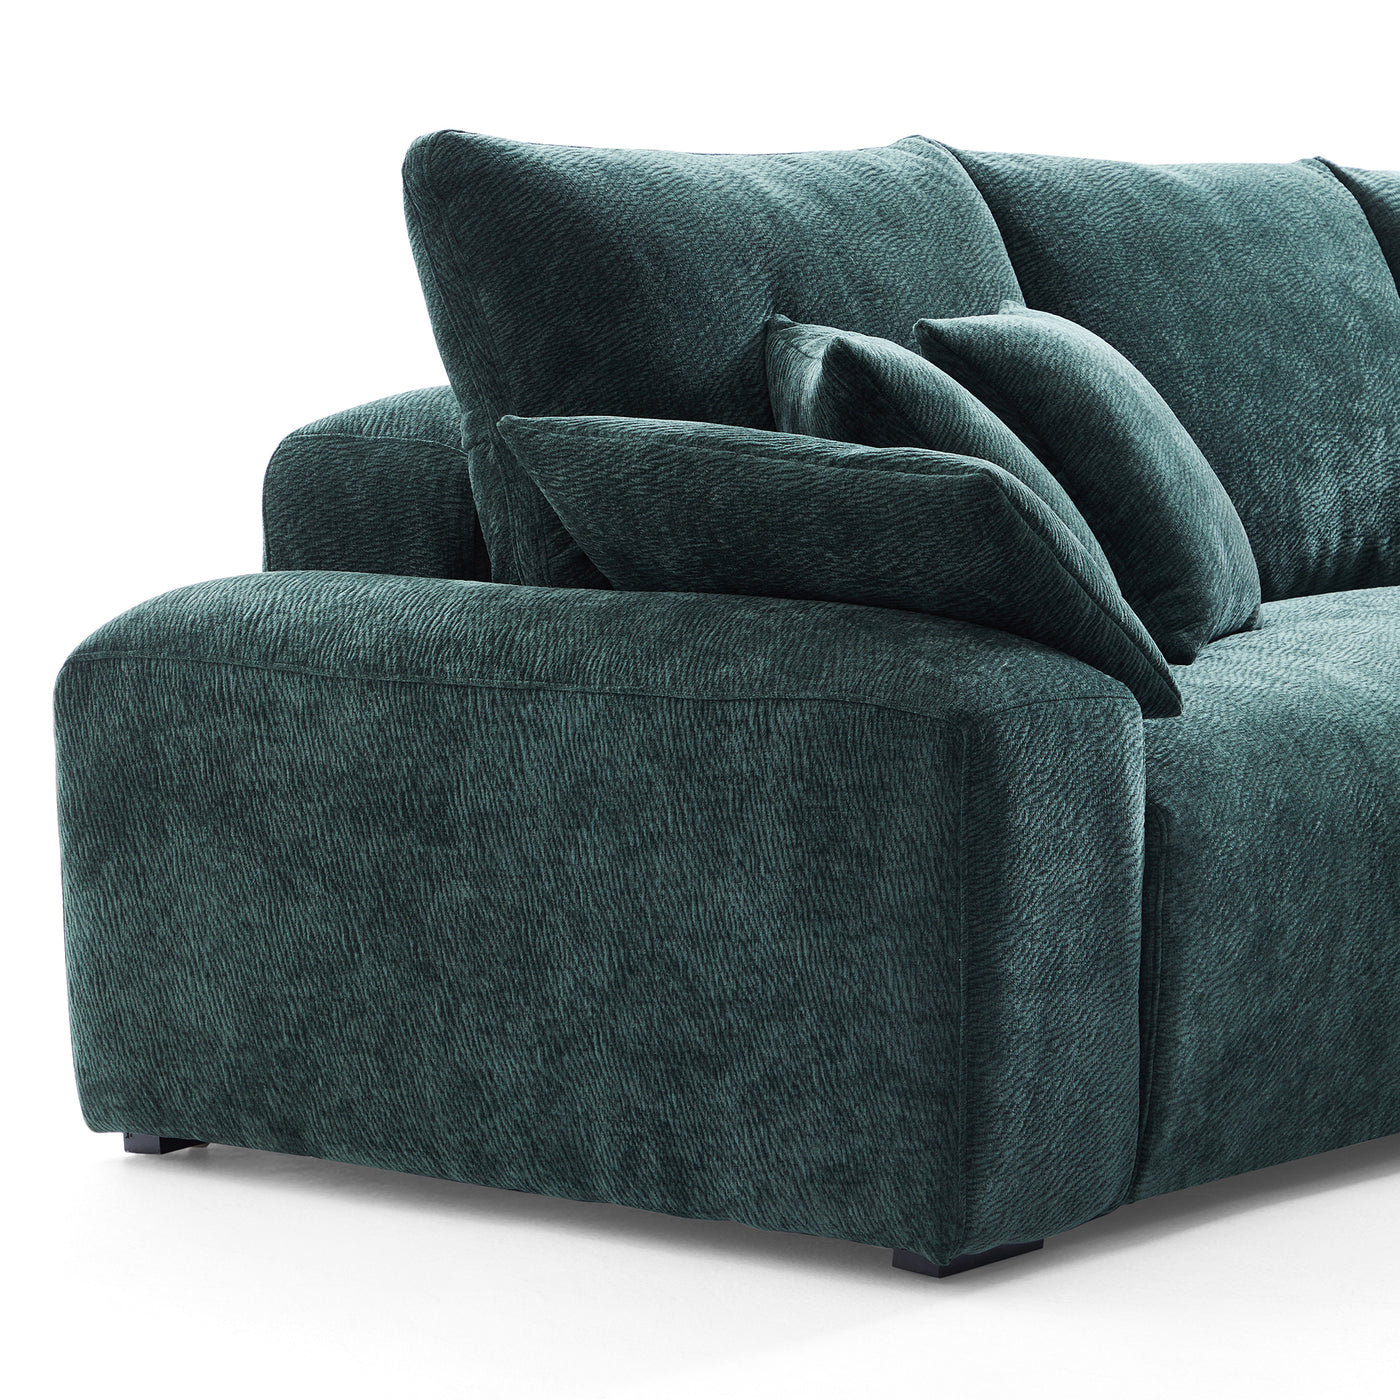 The Empress Green Sofa and Ottoman-Green